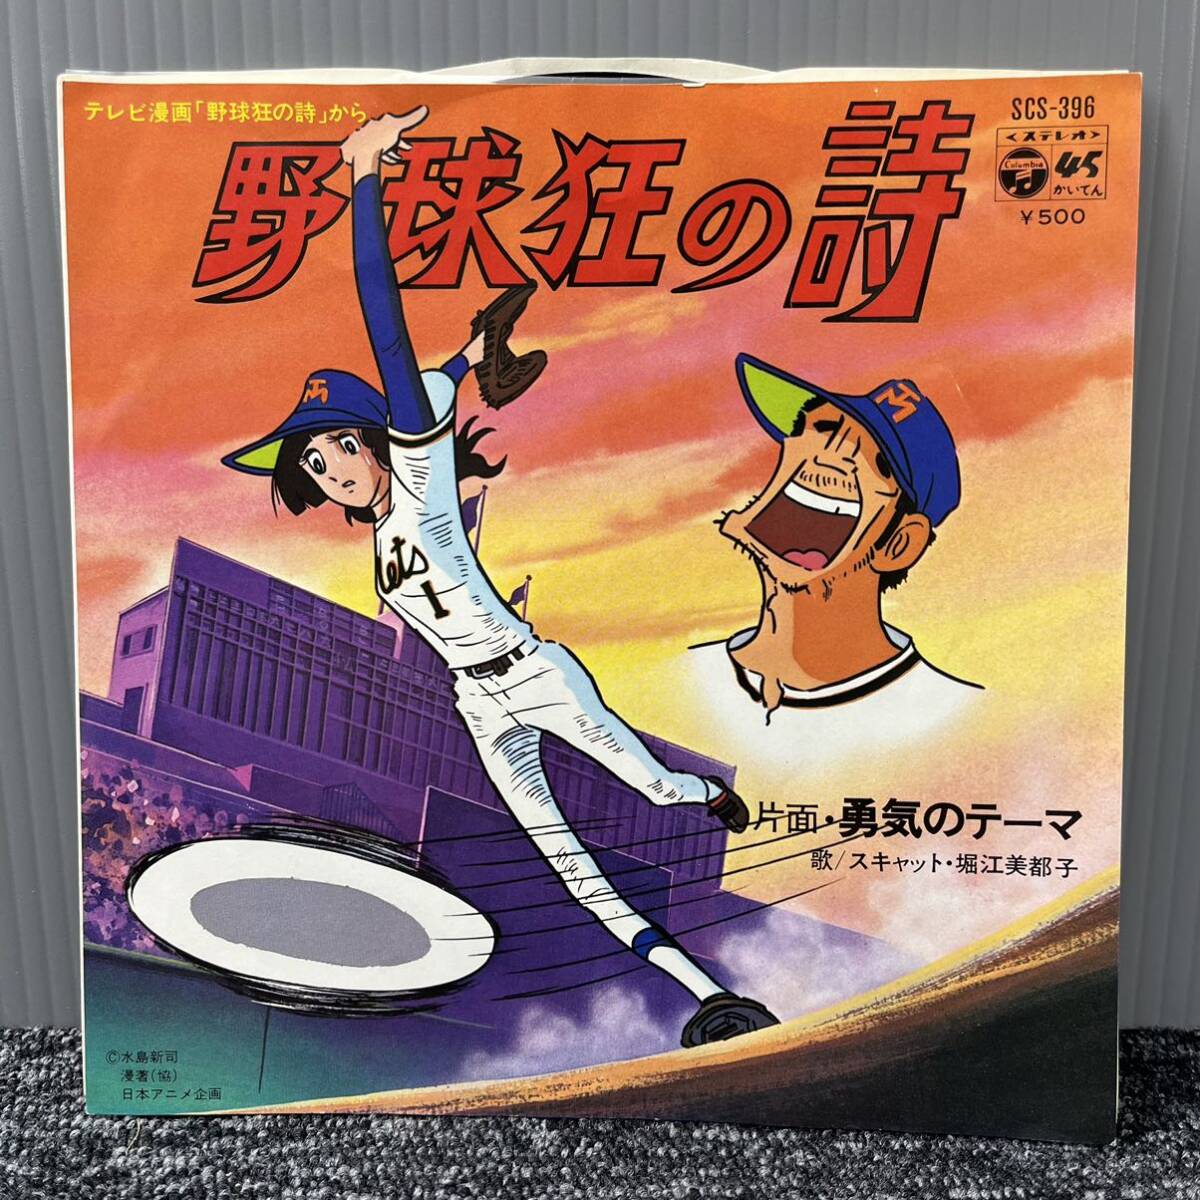 EP запись / Song of Baseball Enthusiasts /... Thema /s кошка * Хориэ Мицуко / SCS-396